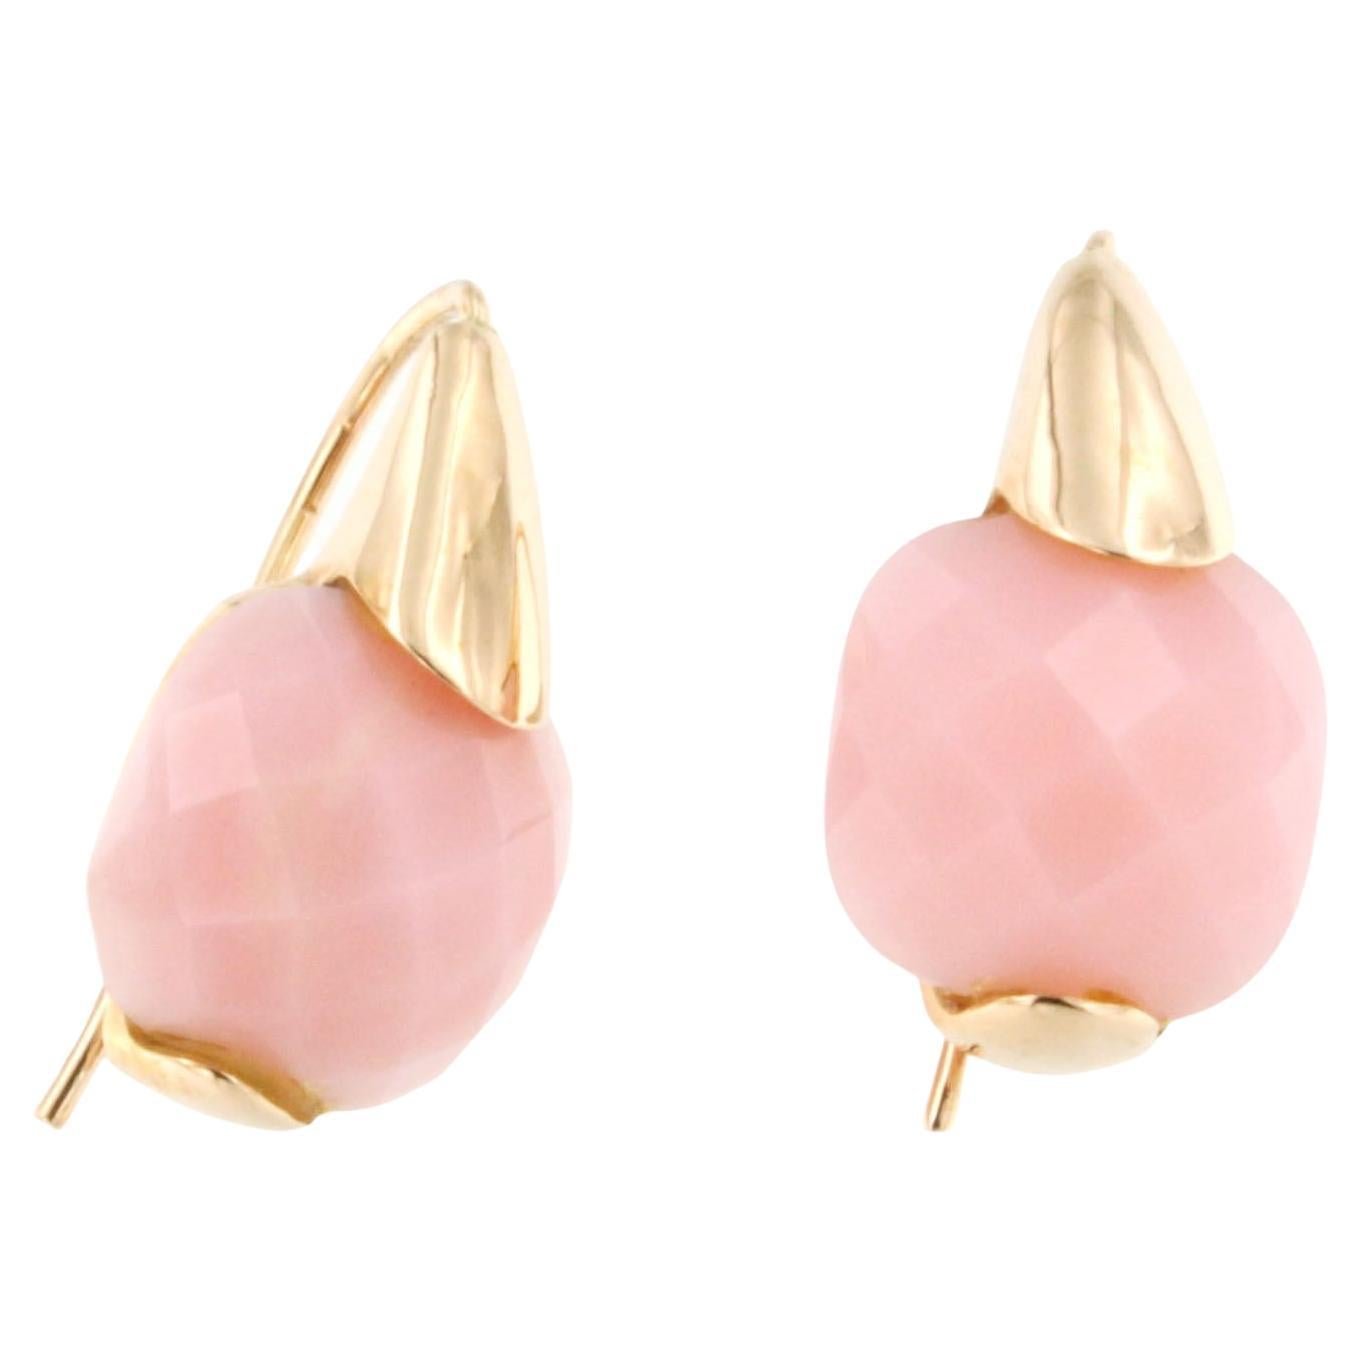 9 Karat Rose Gold with Pink Stones Fashion Earrings